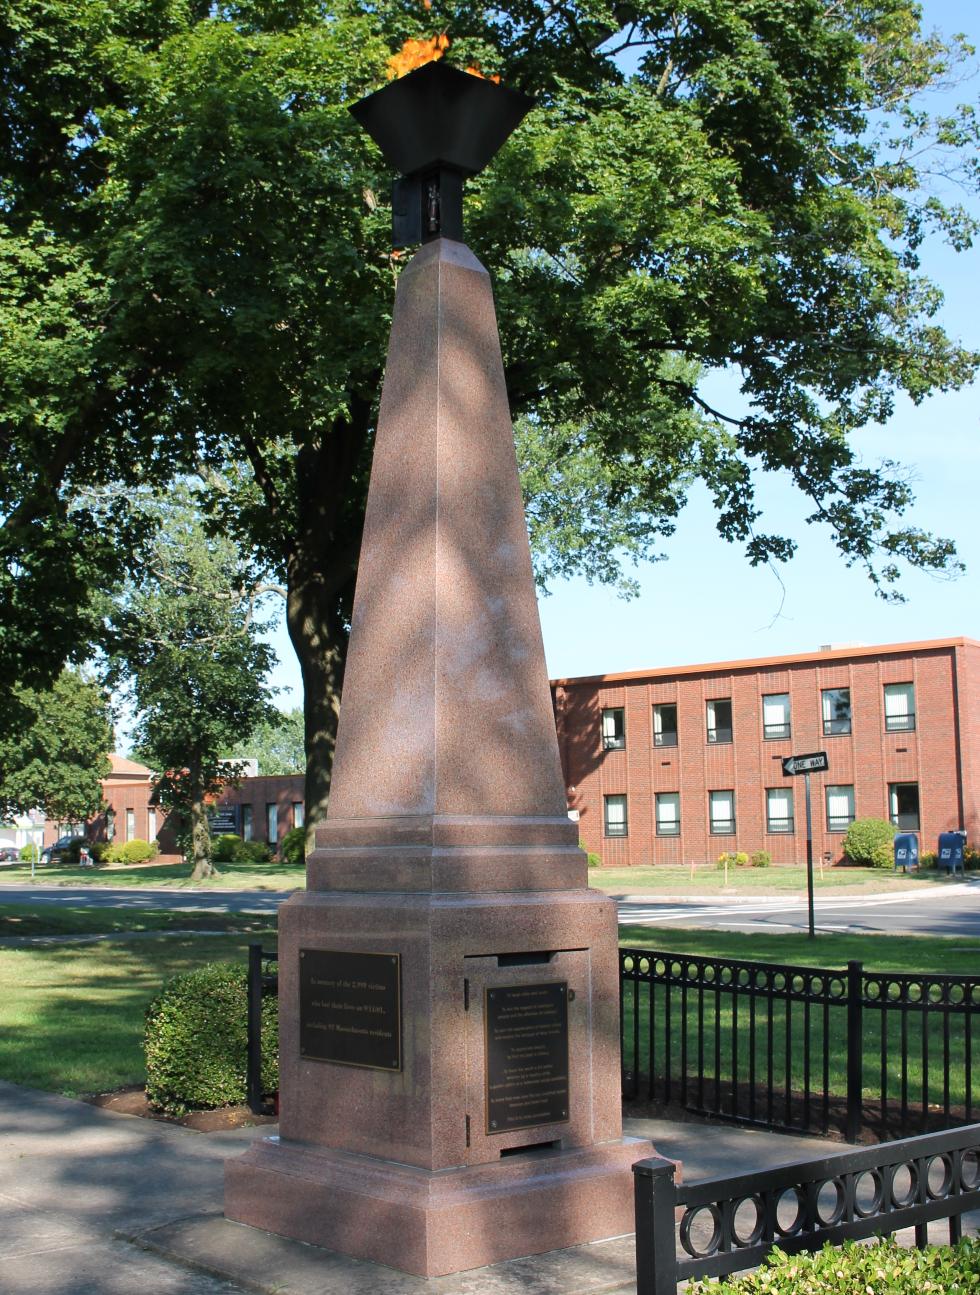 West Springfield Massachusetts Melissa Harrington-Hughes September 11 Memorial